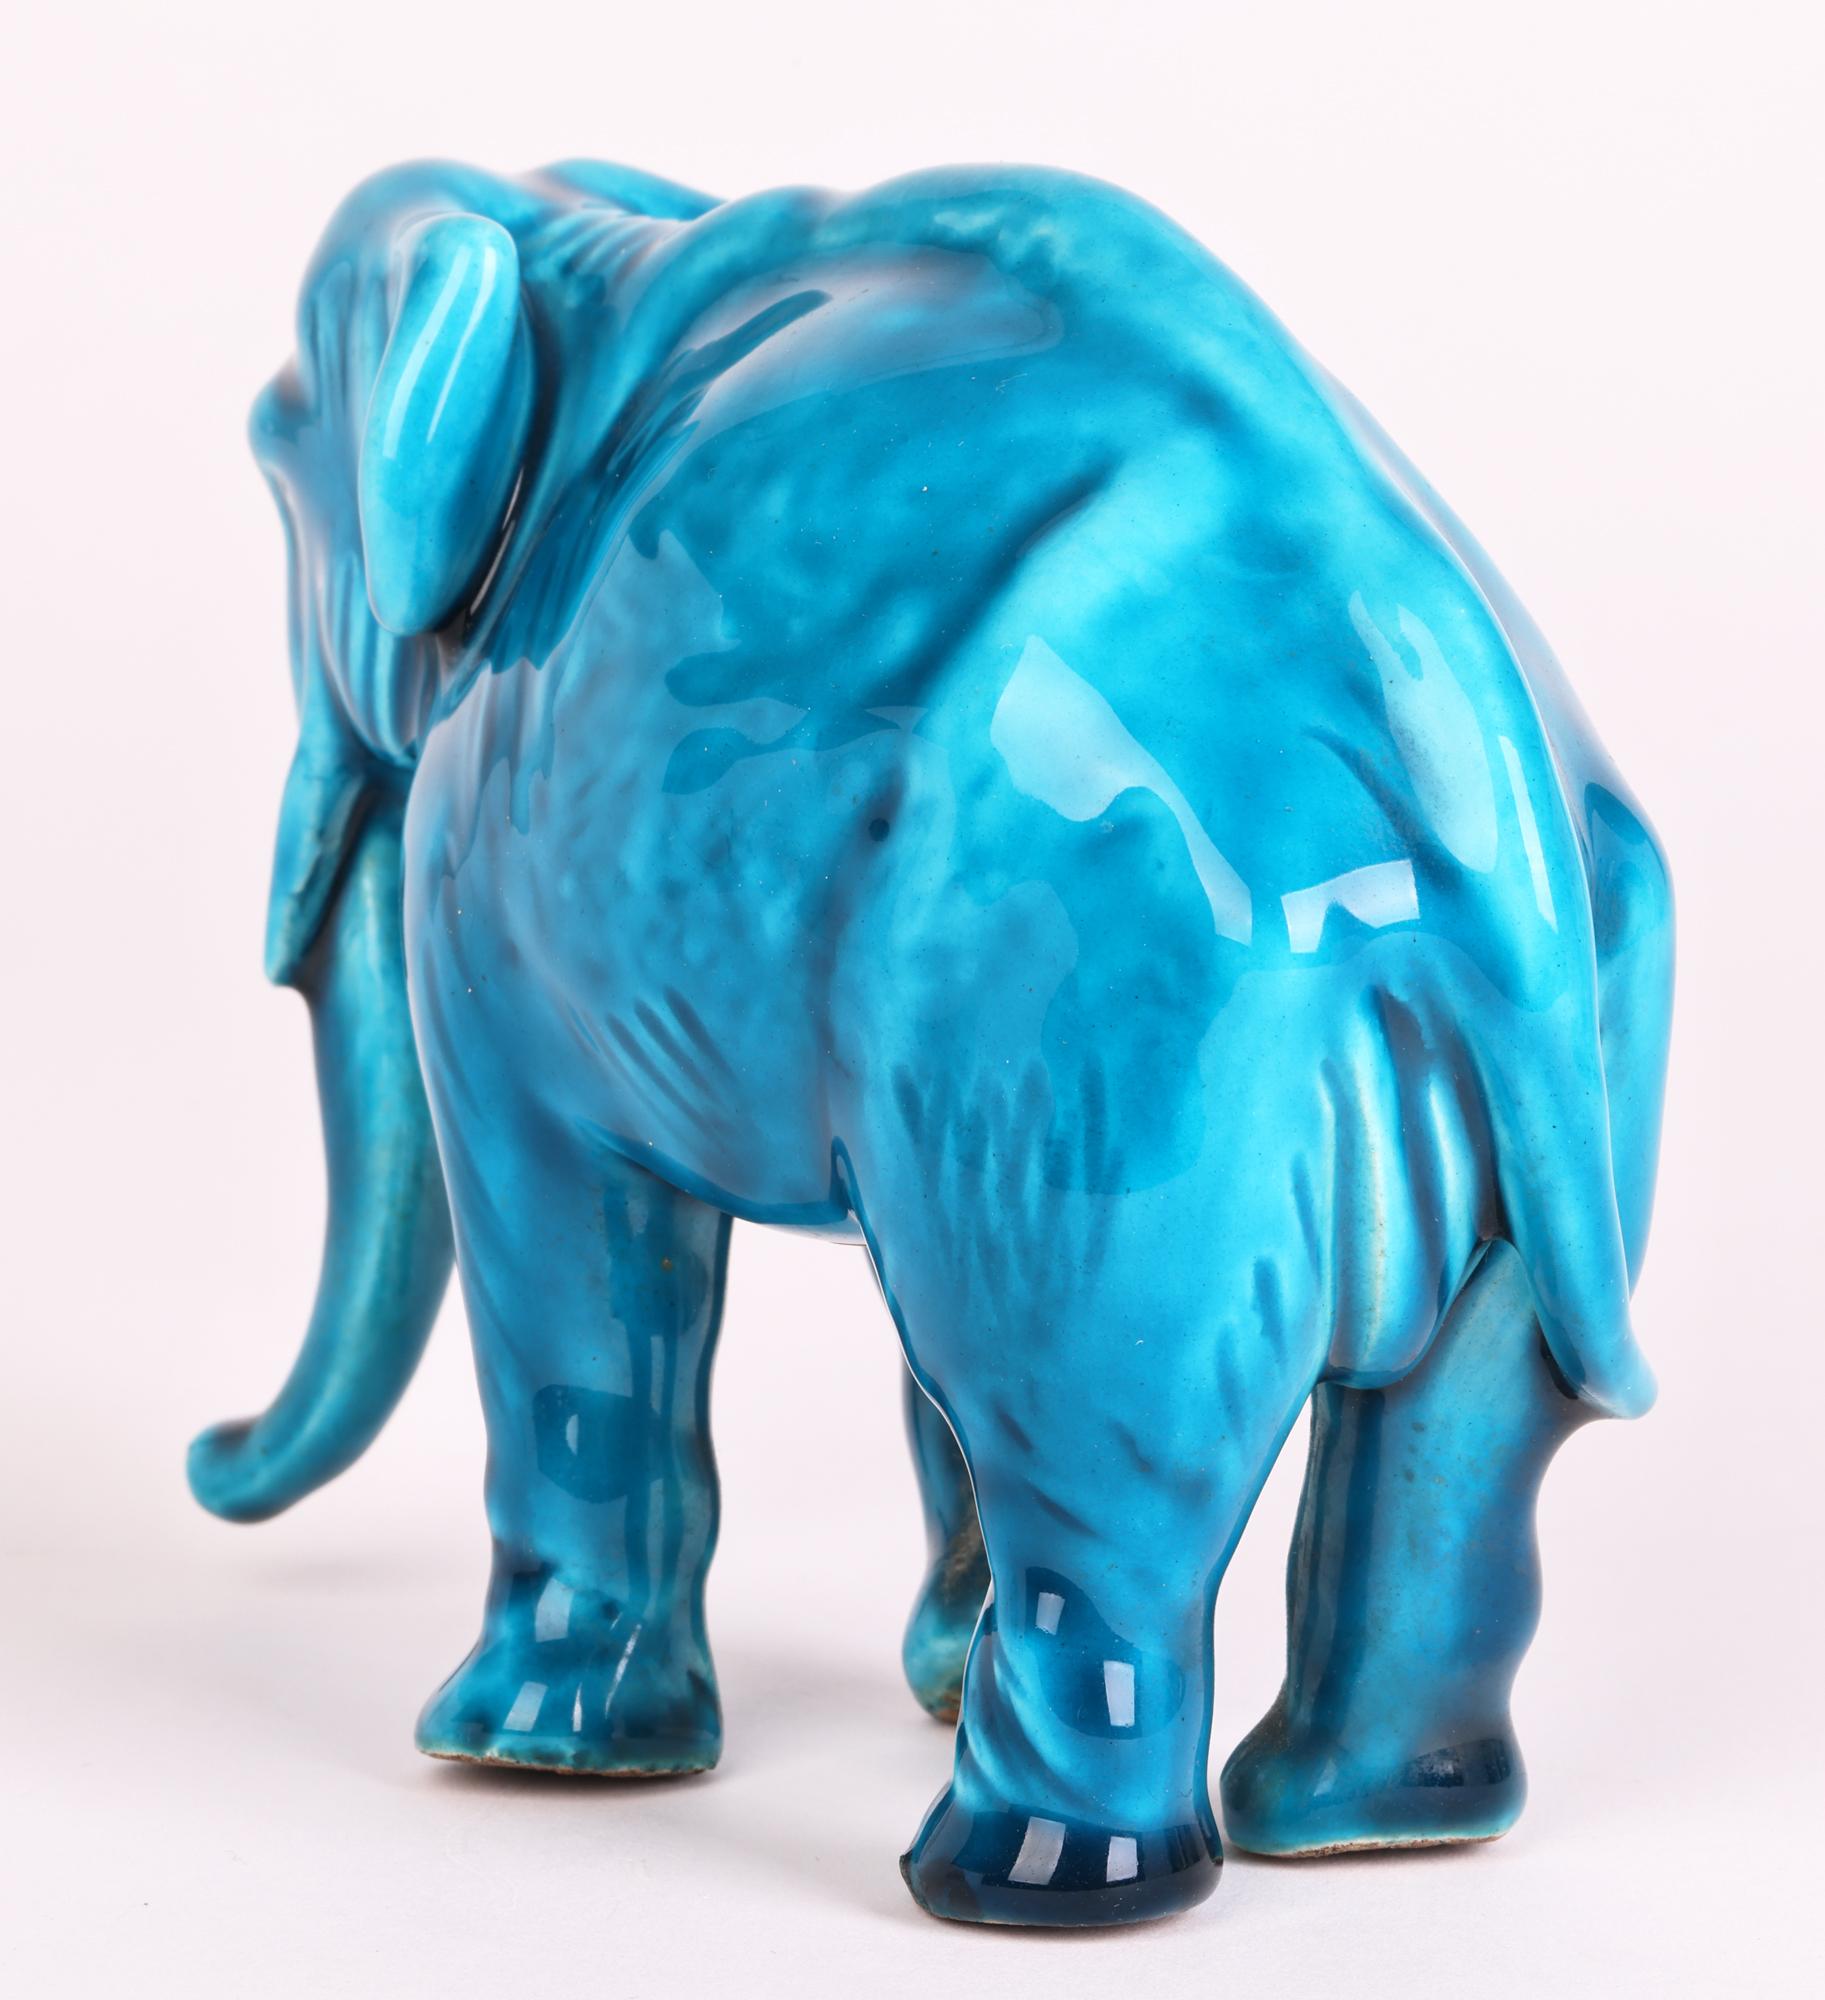 Paul Milet Sevres Turquoise Glazed Ceramic Elephant Figure    In Good Condition For Sale In Bishop's Stortford, Hertfordshire